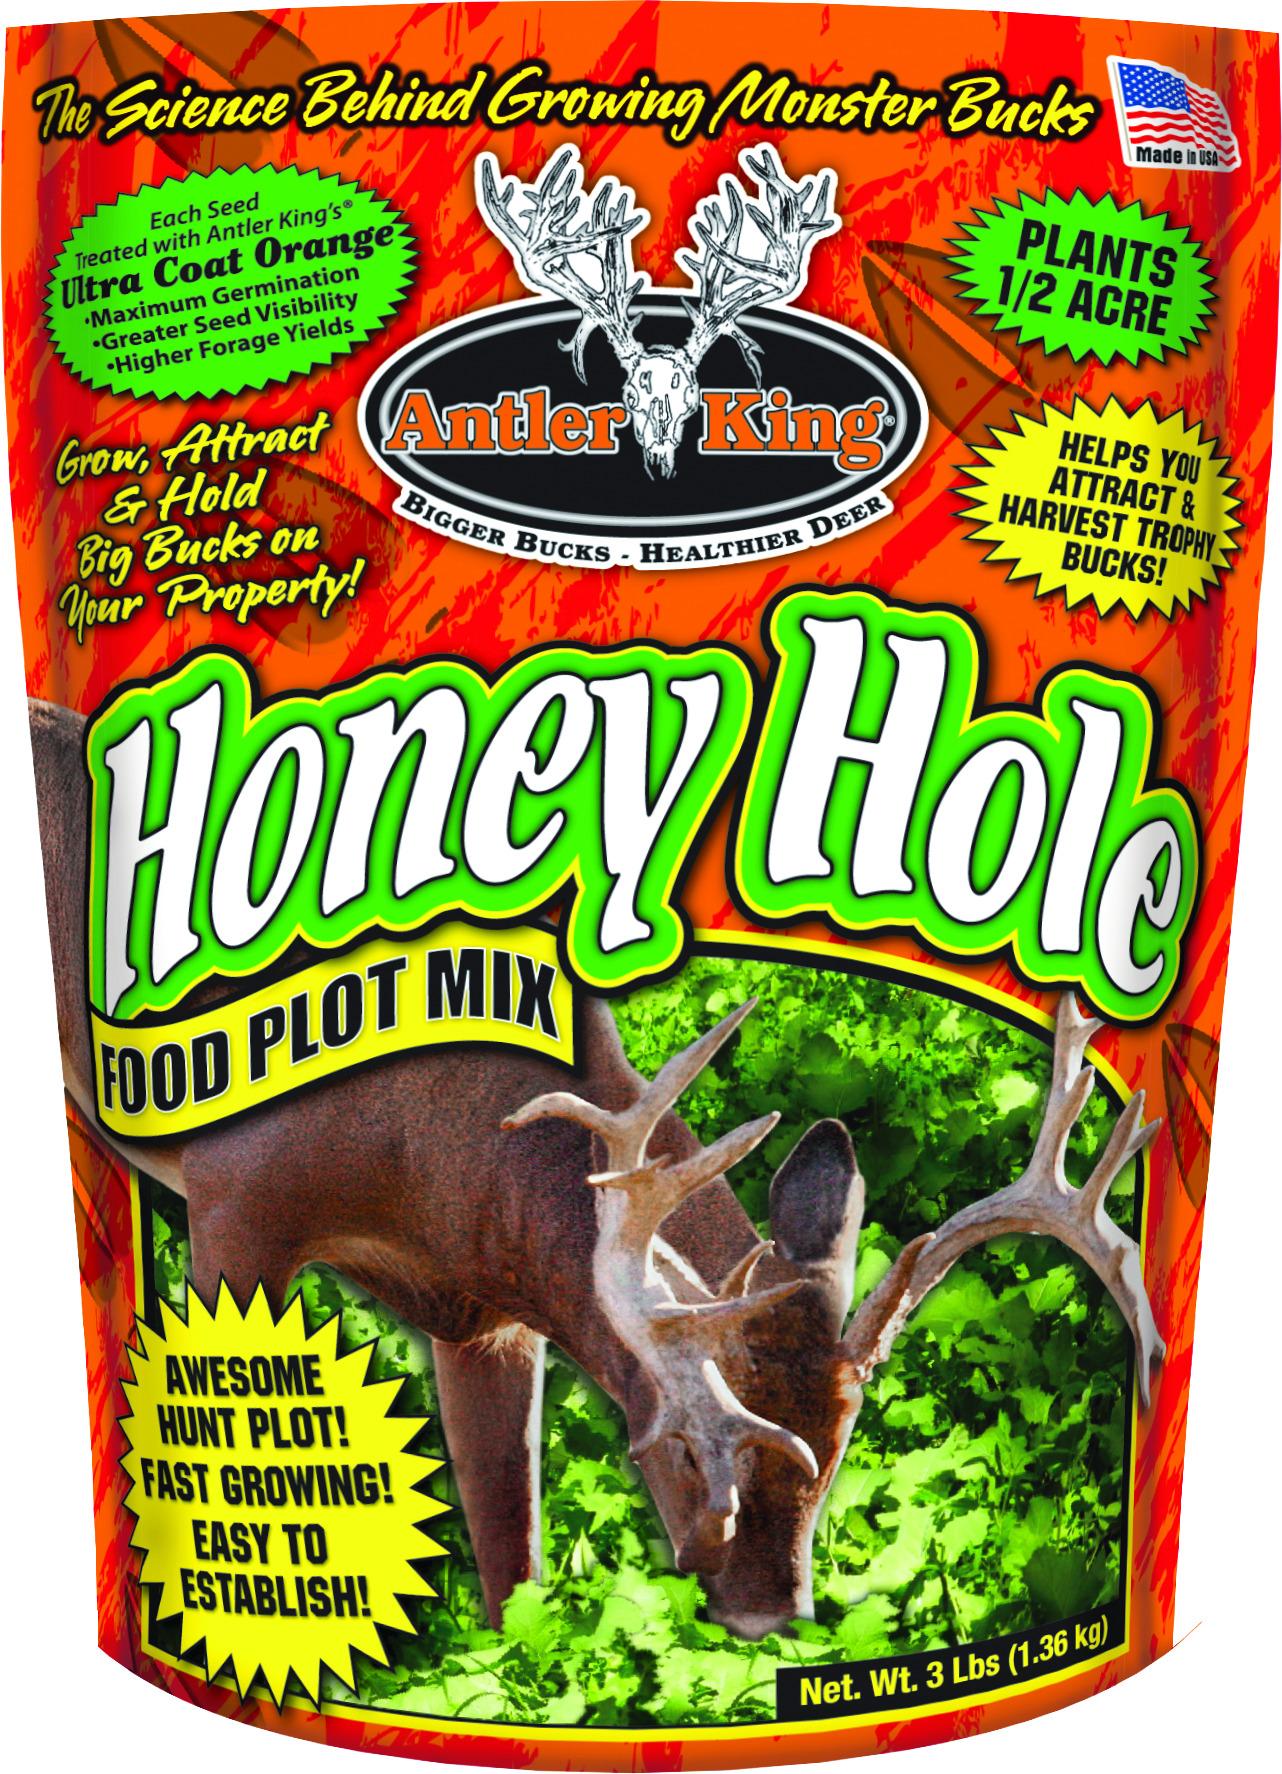 Antler King 3HH Honey Hole Food Plot Mix- 3lb bag covers 1/2 acre